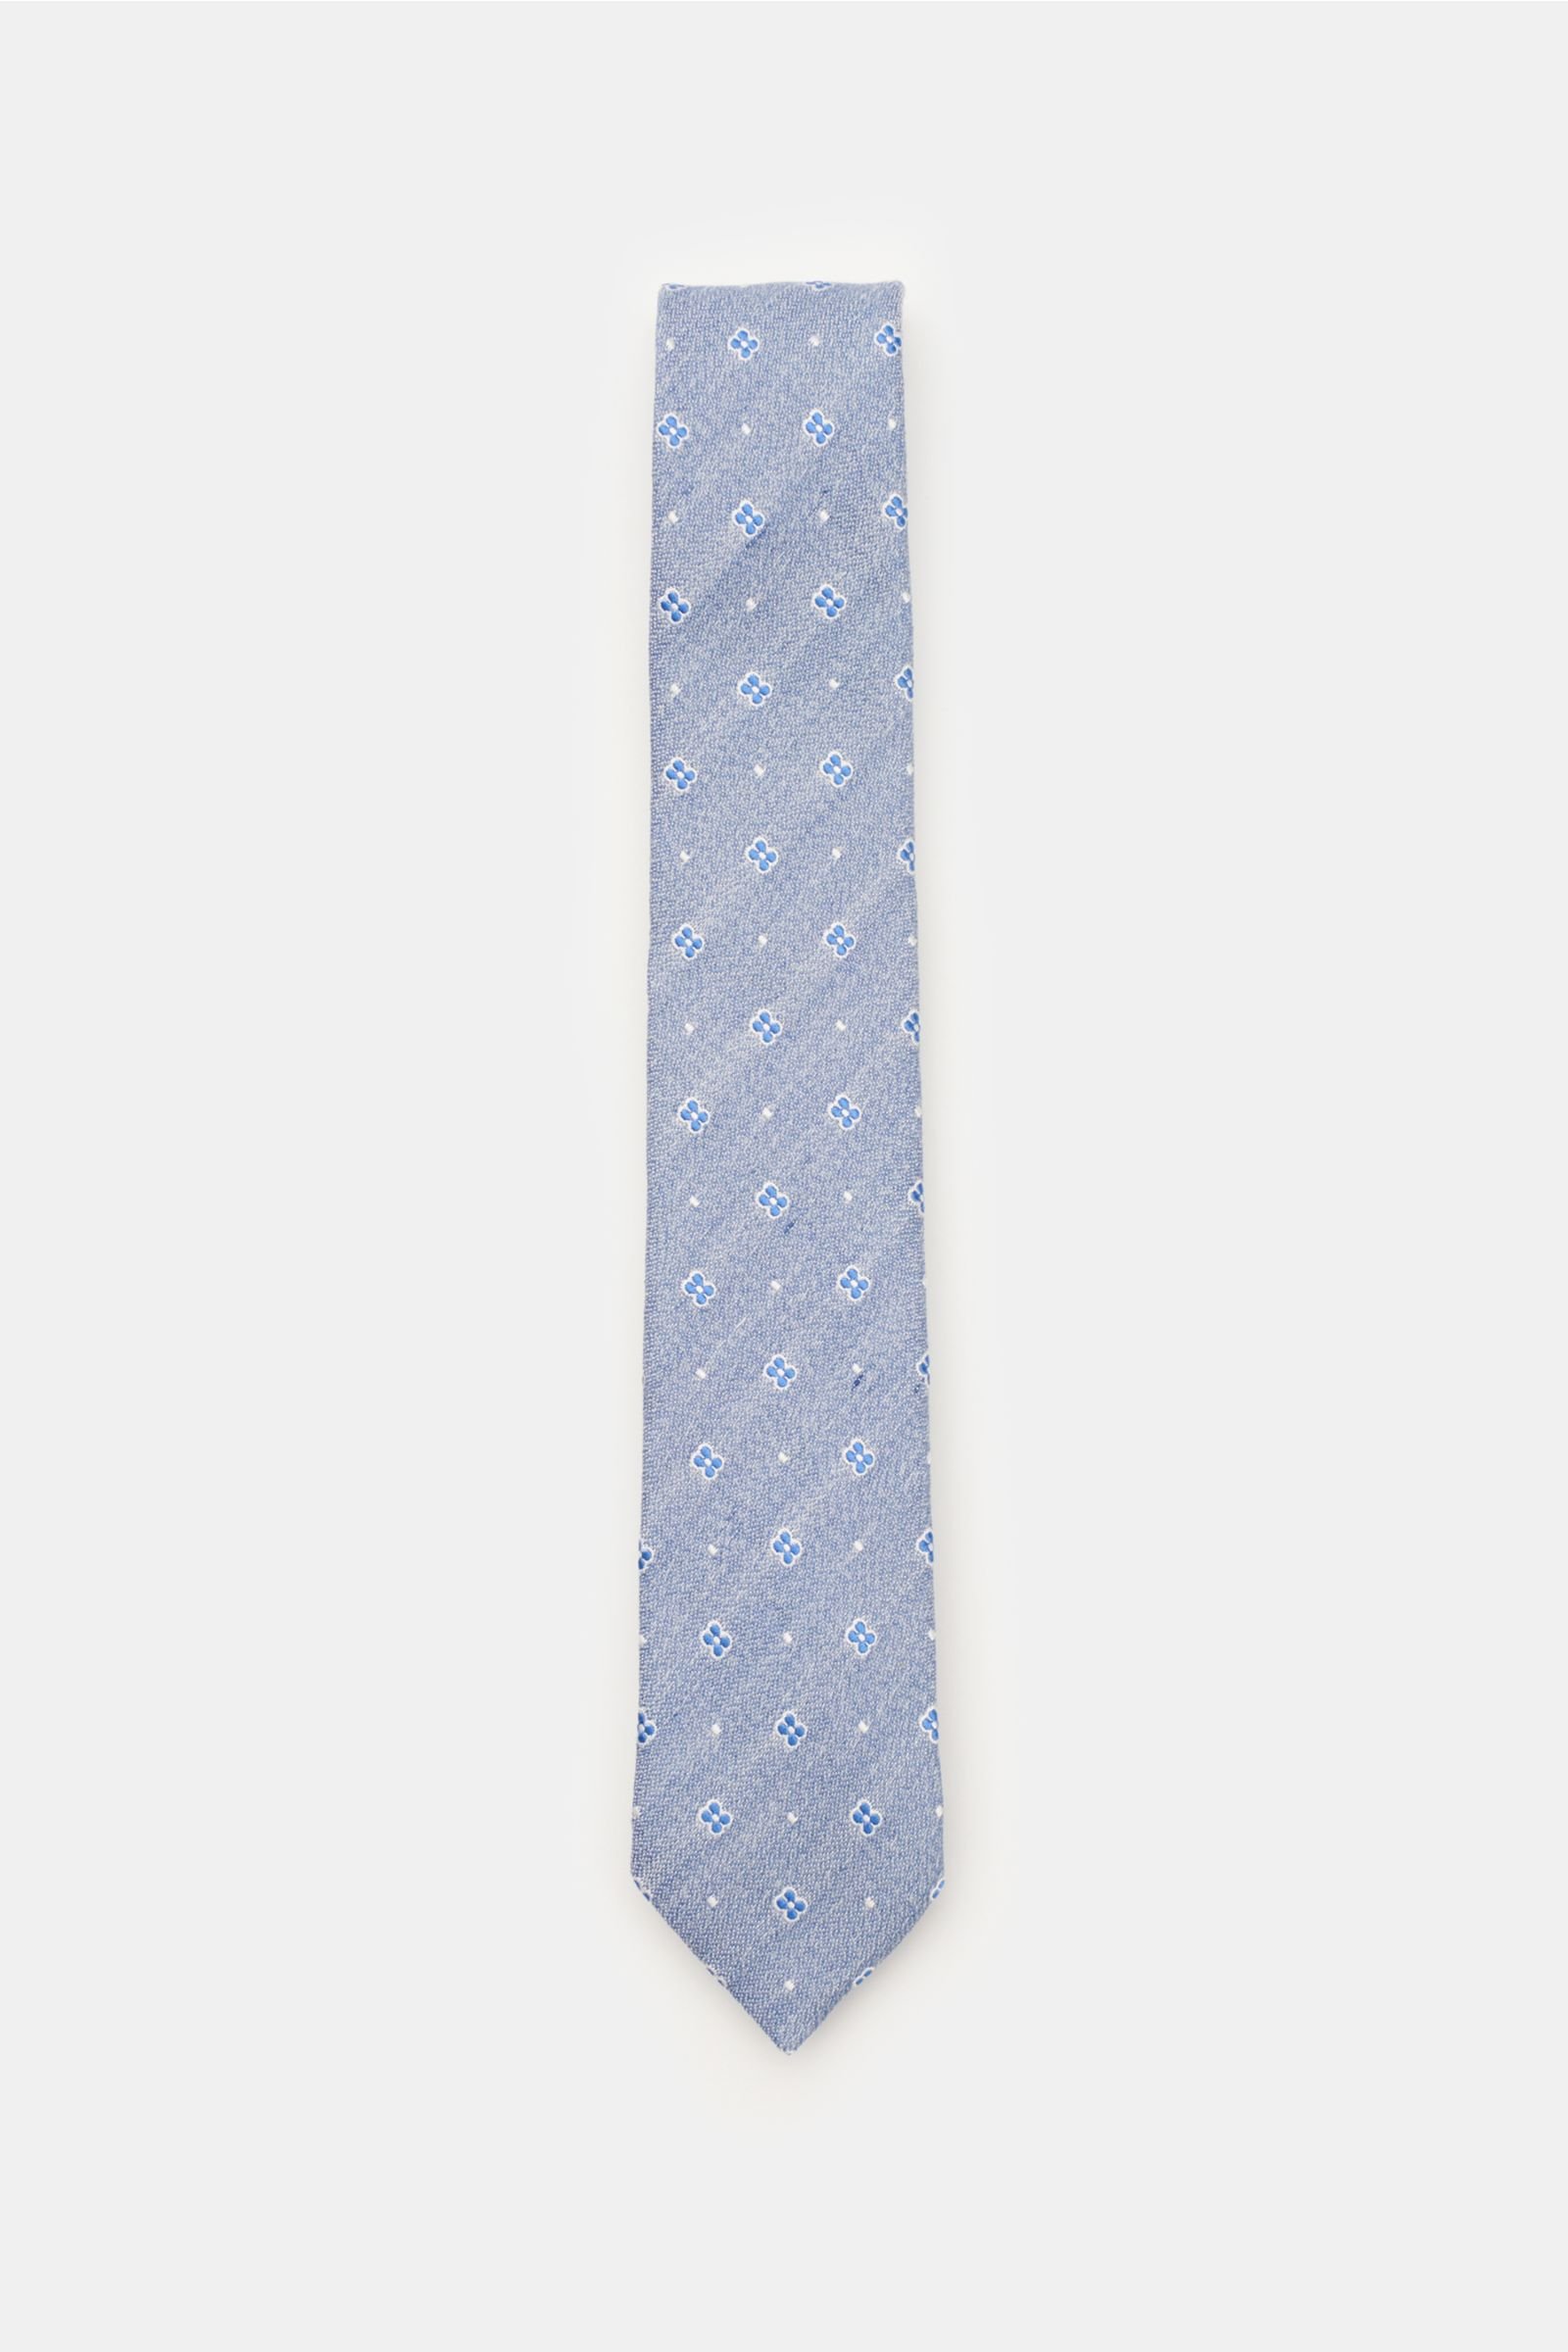 Krawatte rauchblau/blau gemustert